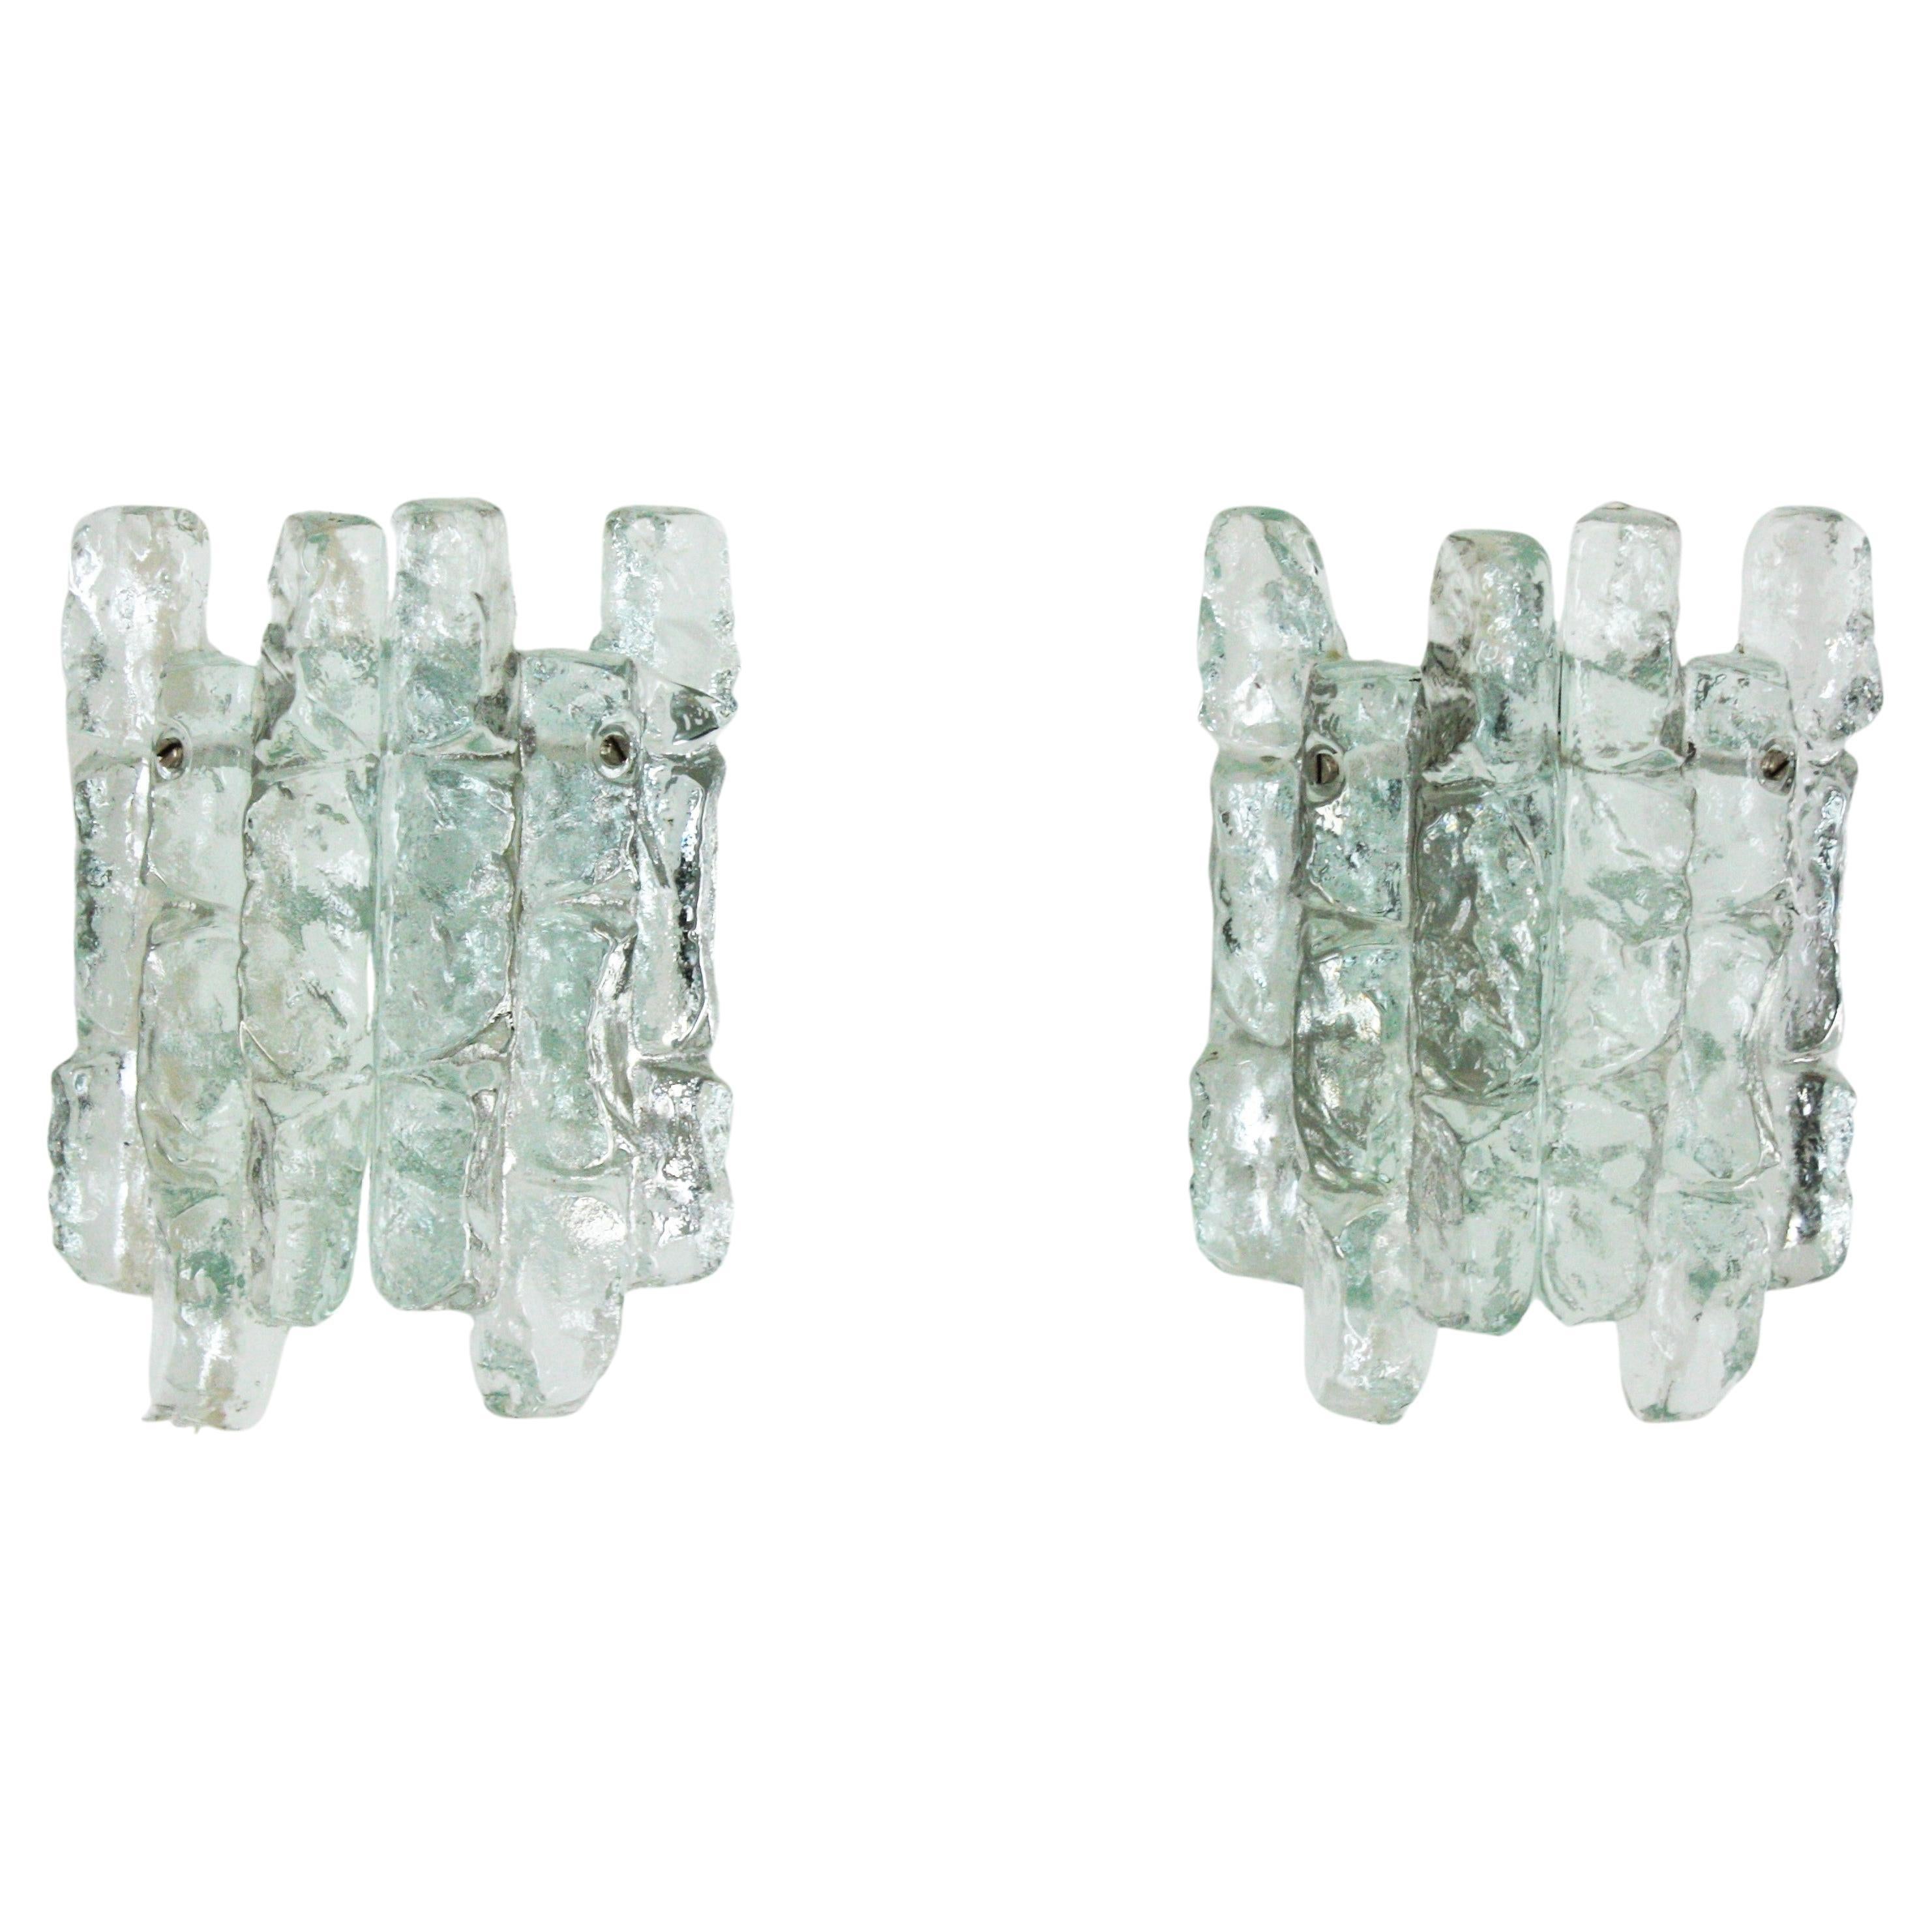 Pair of Kalmar Ice Glass Wall Sconces, 1960s